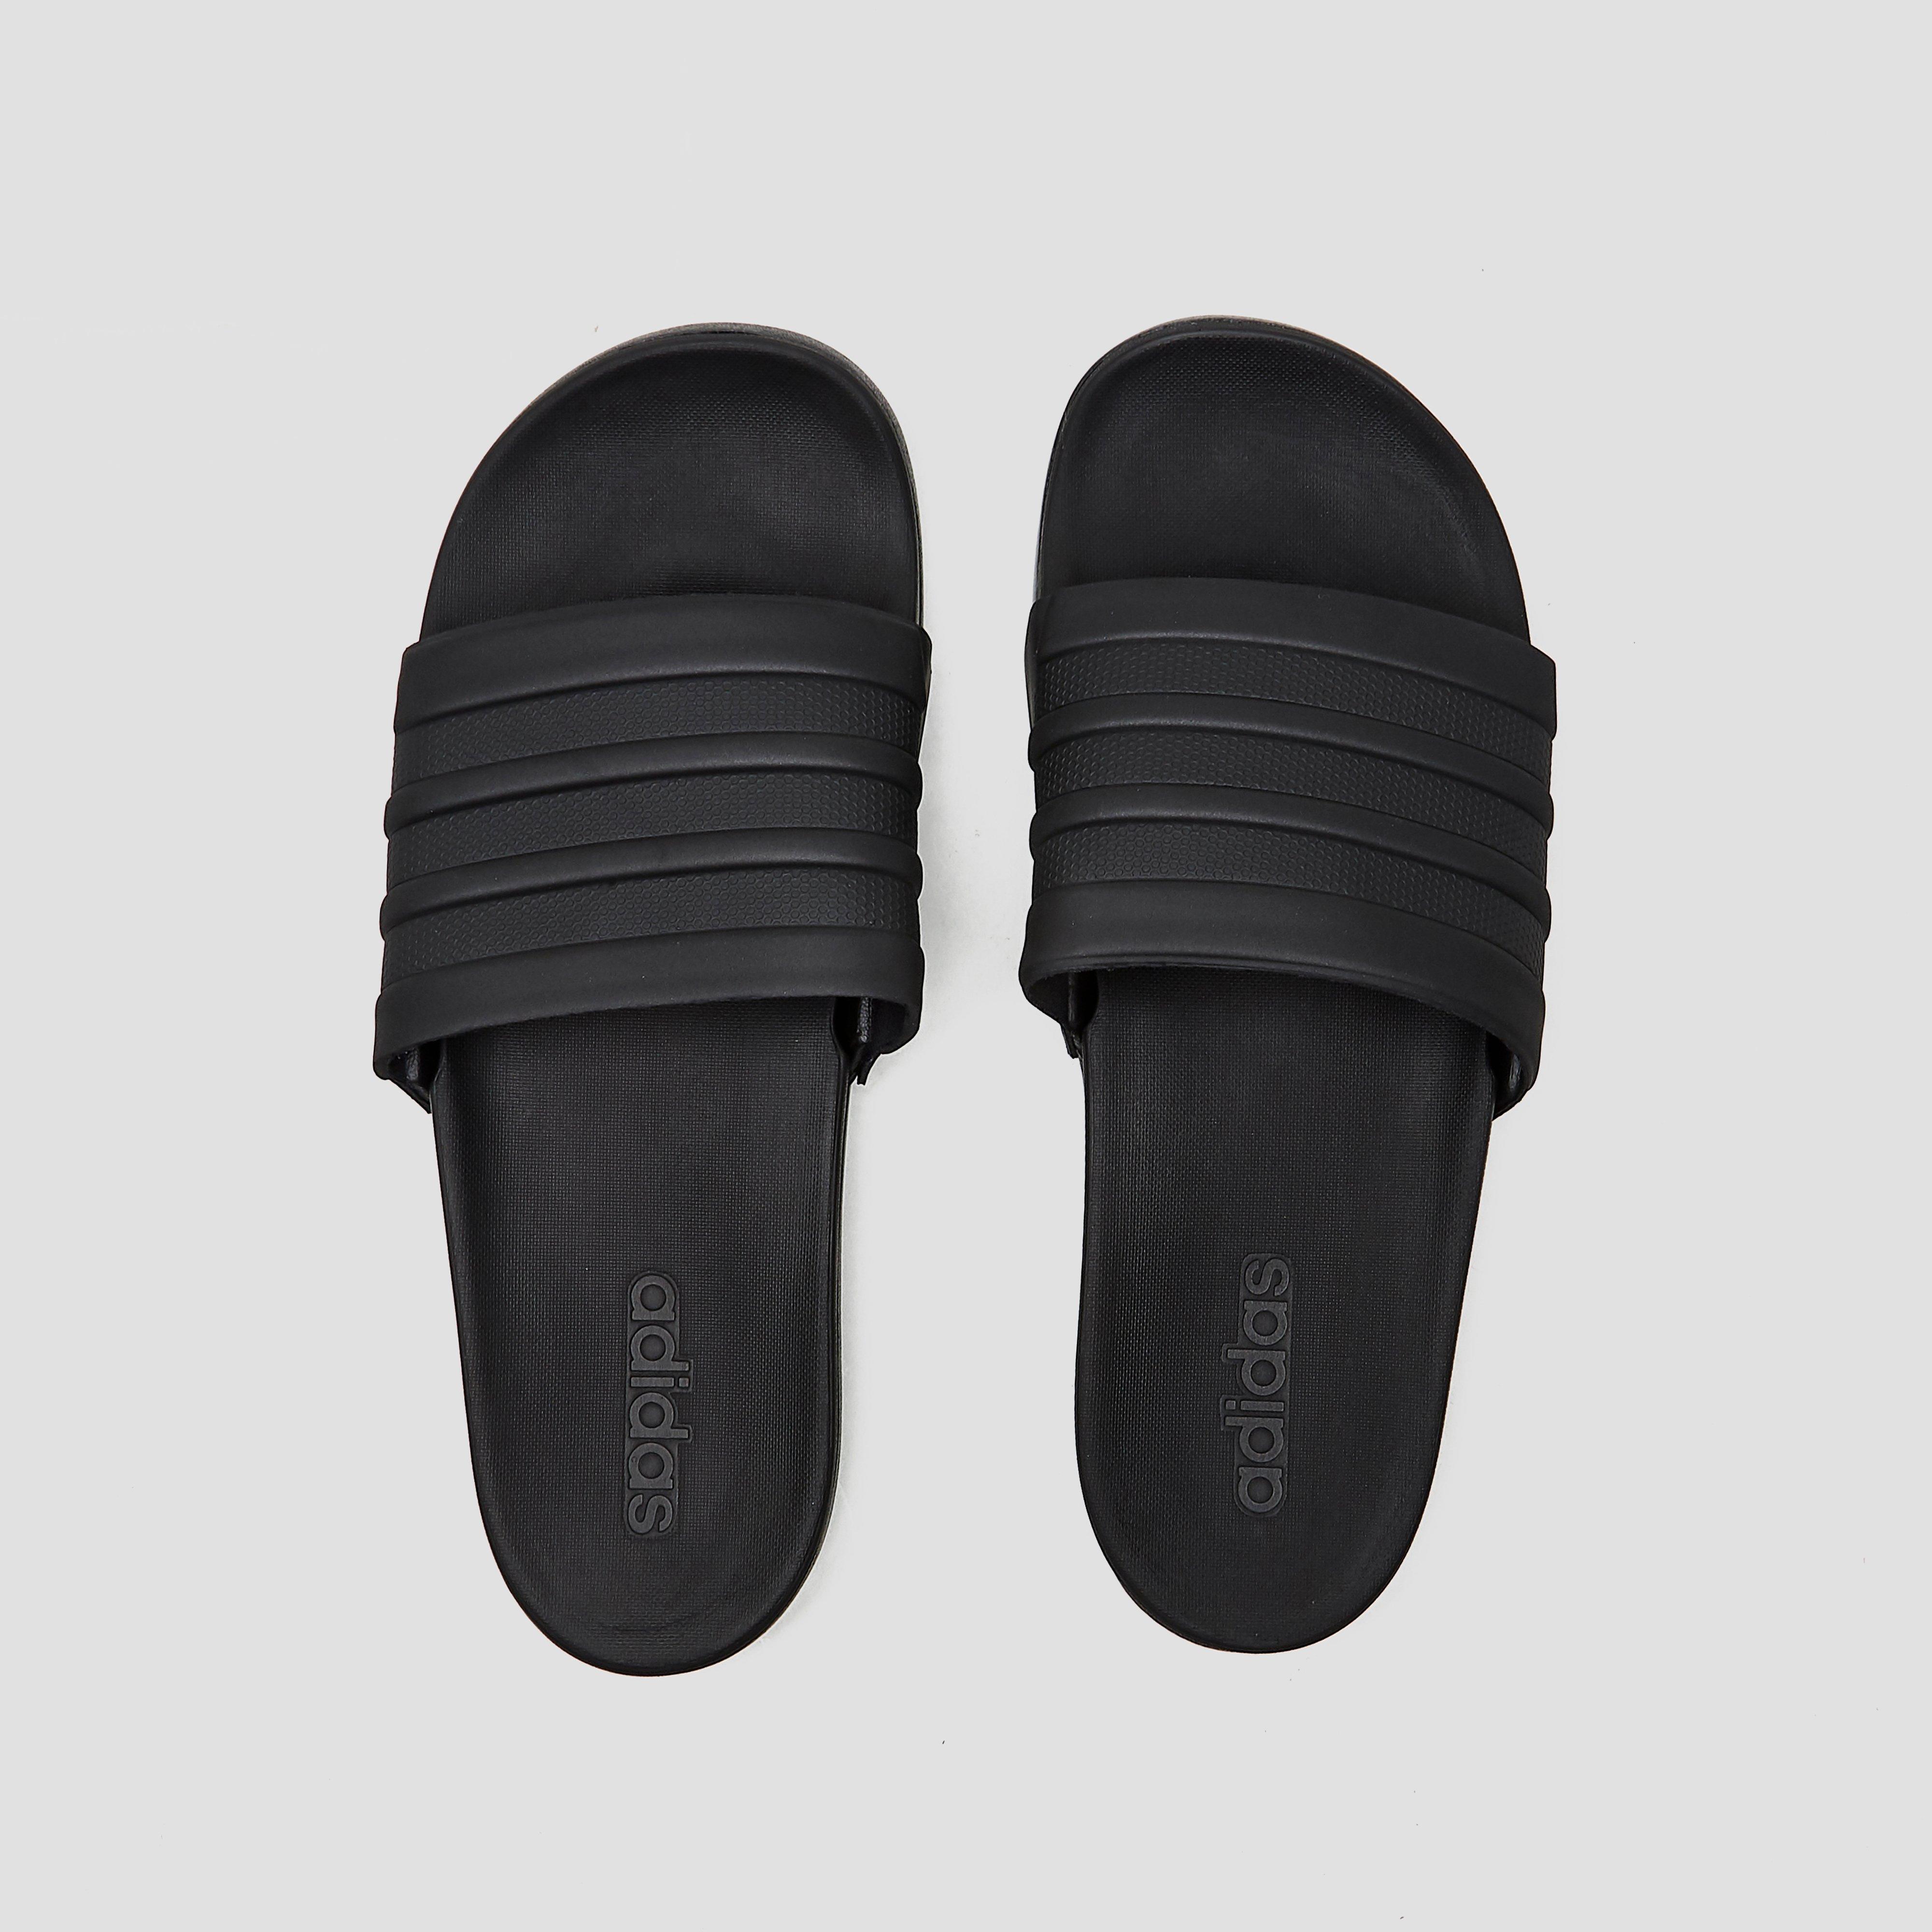 cloudfoam slippers